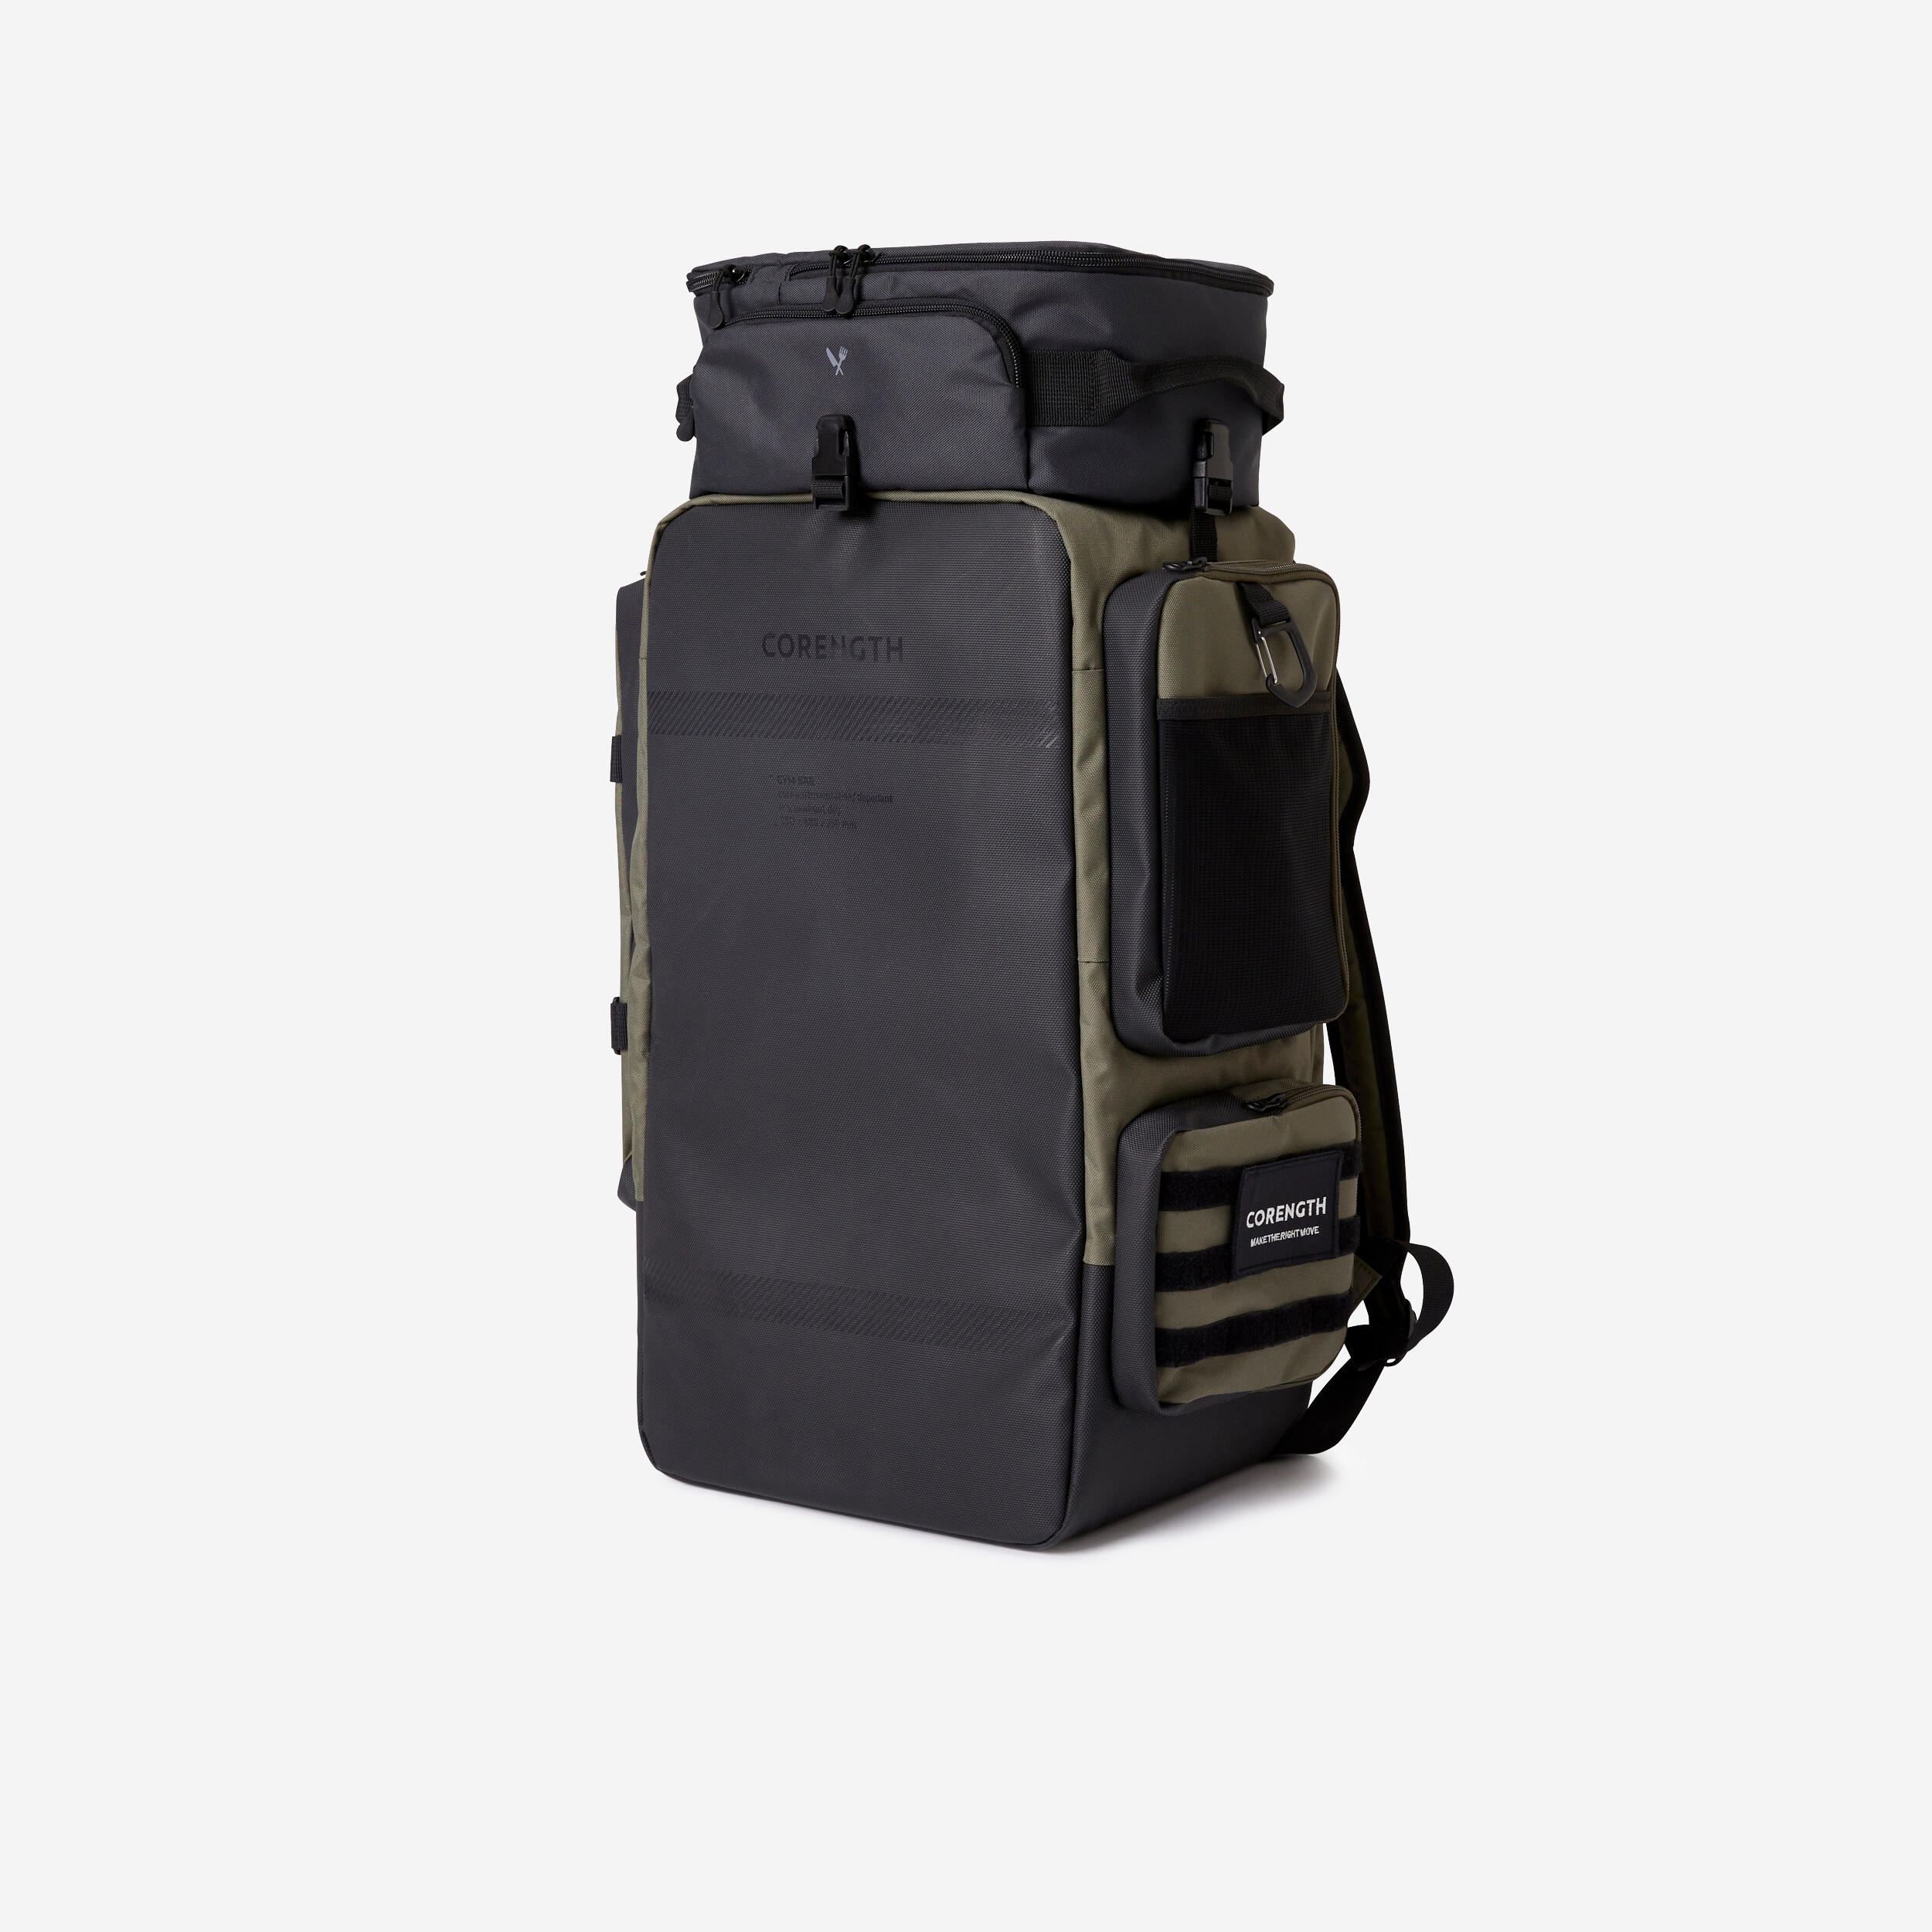 FitLocker Duffle Bag 40L - Khaki - - Sports-Accessories - Sports-Bags -  Orion Gift World